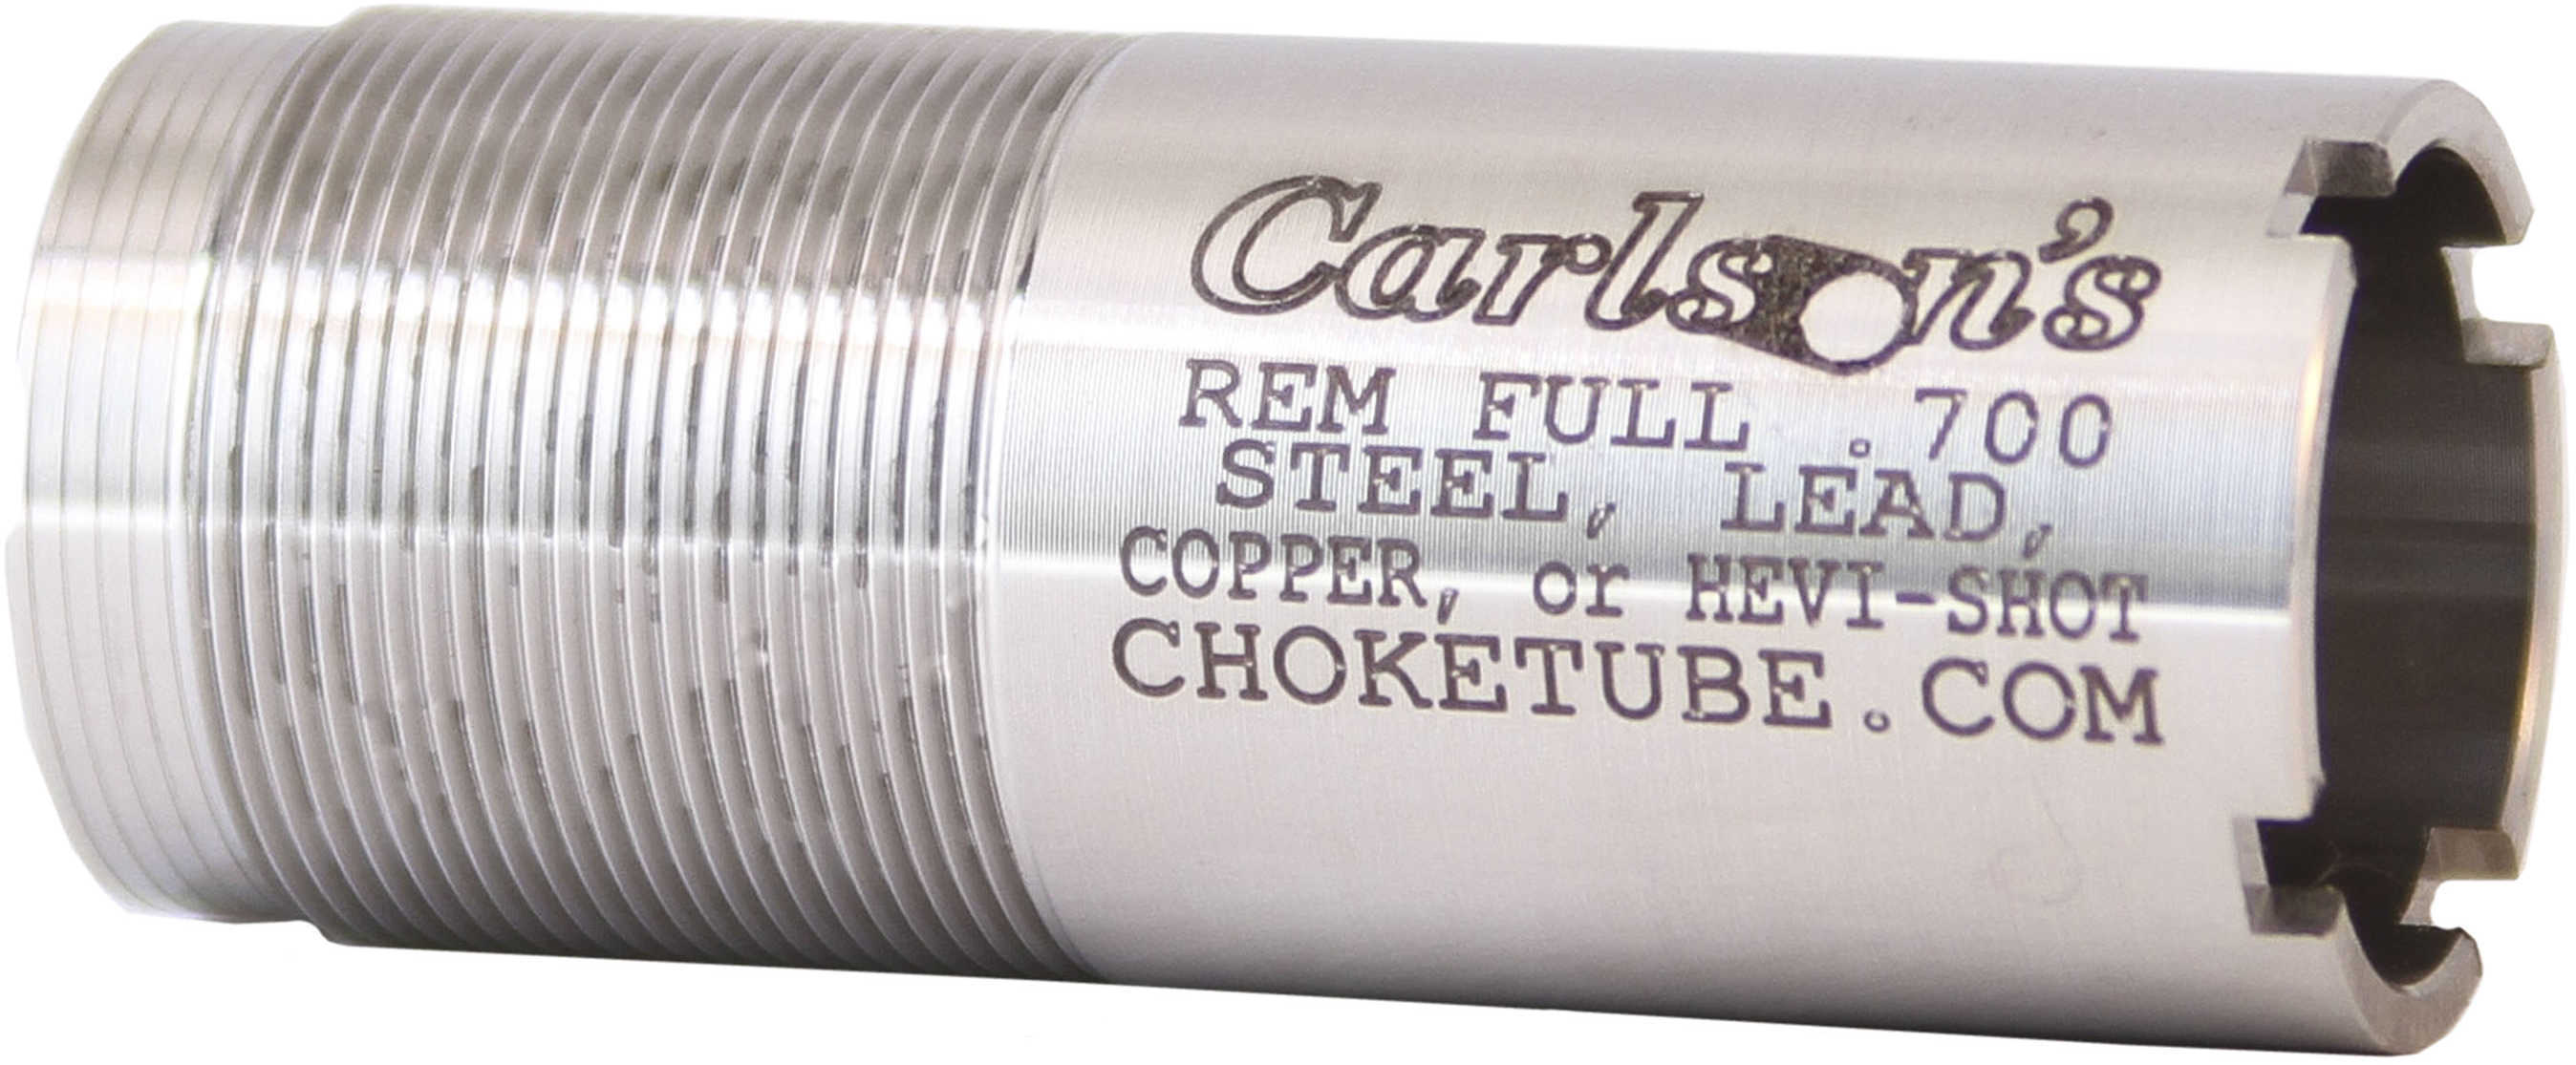 Carlsons Remington Choke Tube 12 ga. Full-img-1